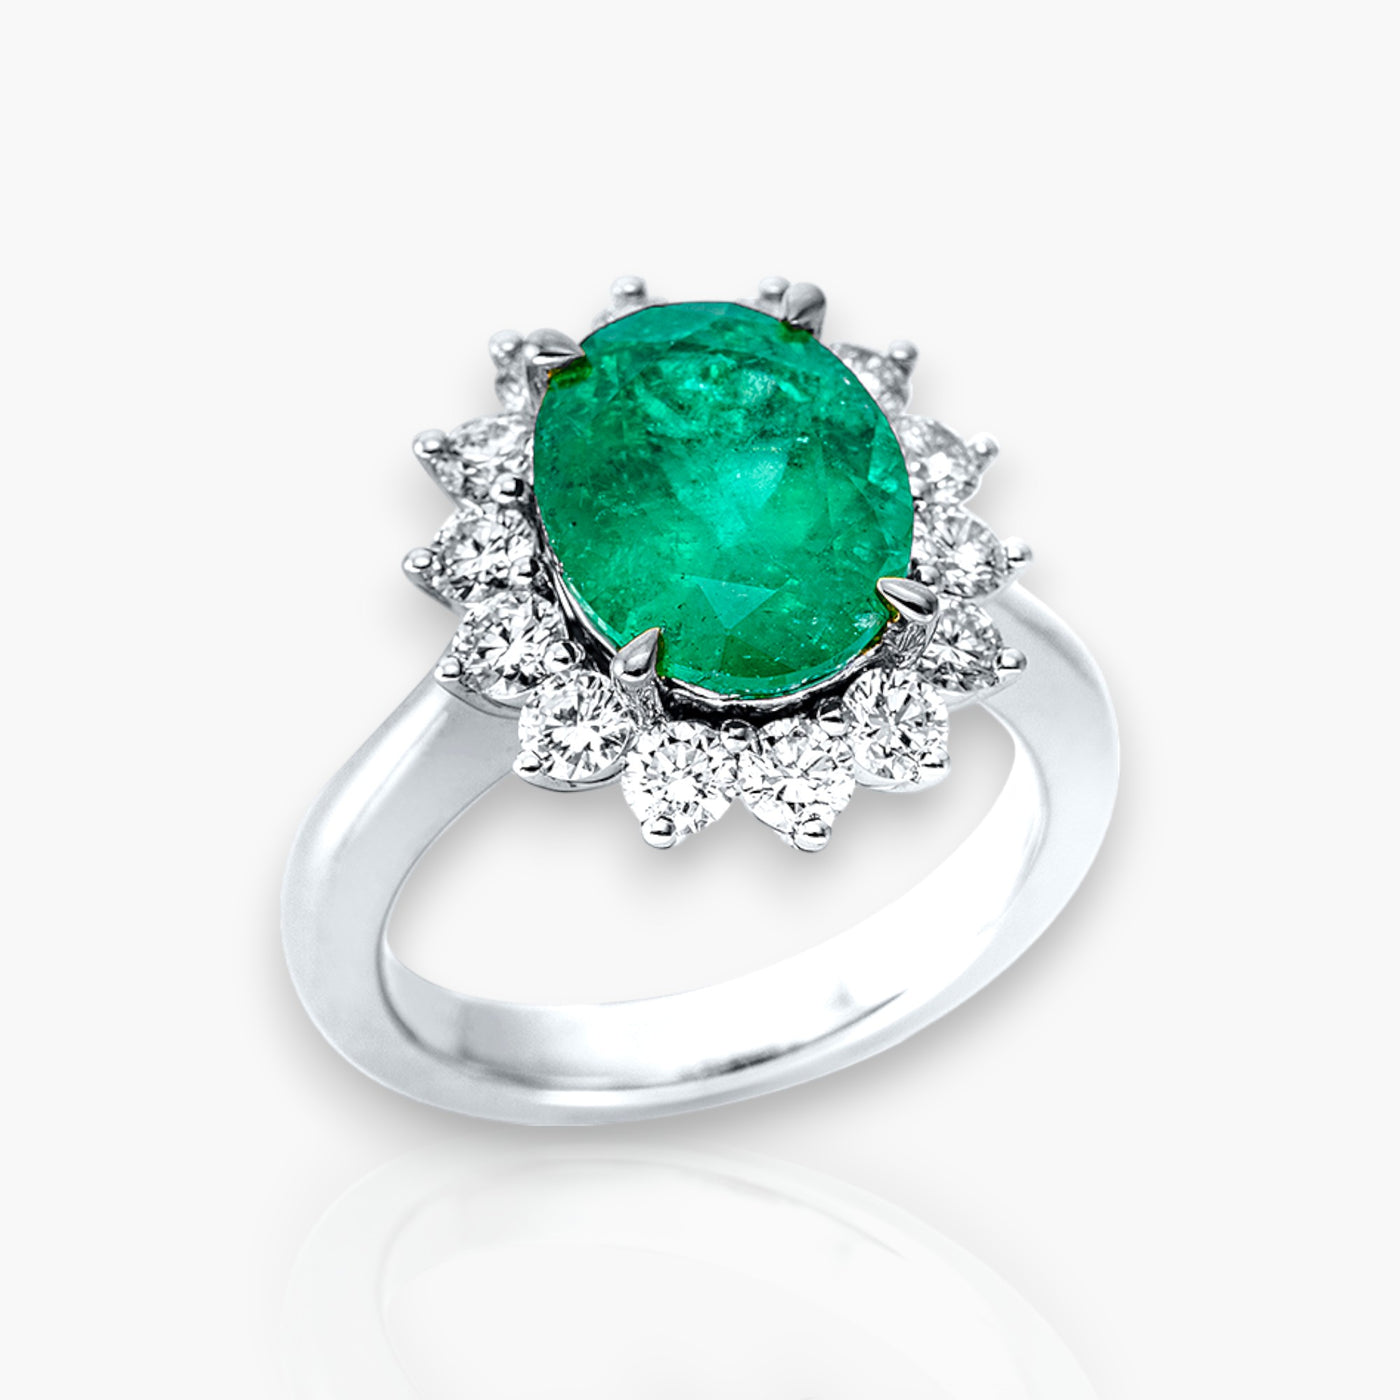 The Emerald Ring - Moregola Fine Jewelry